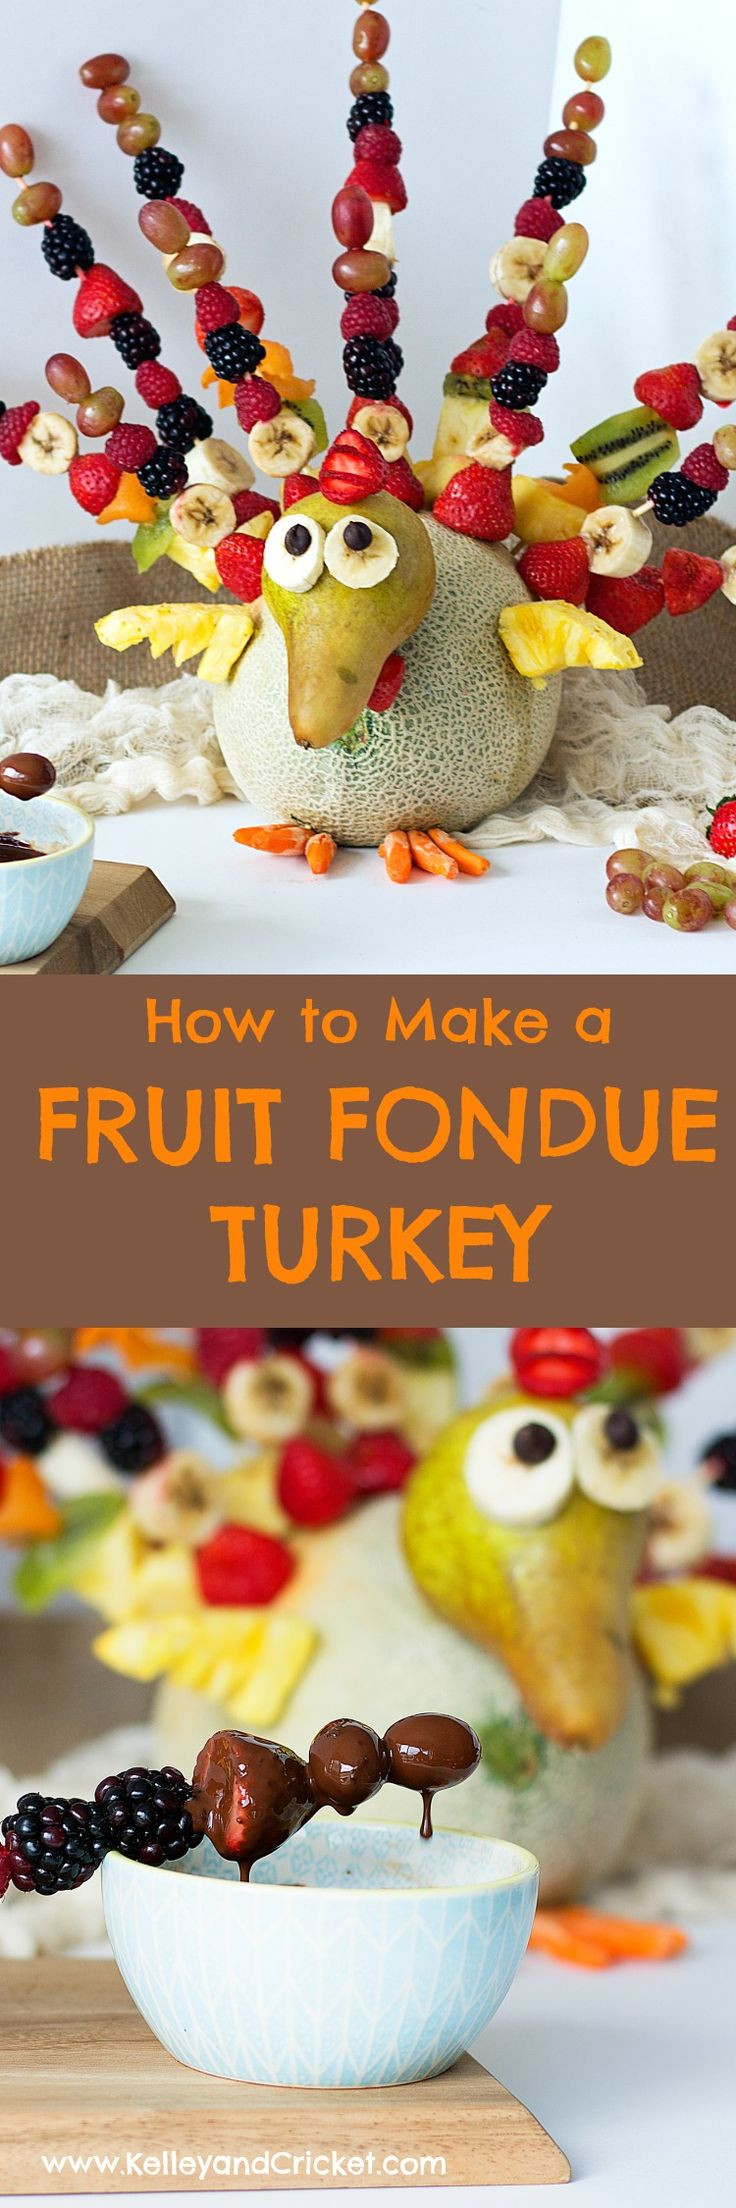 Thanksgiving Fruit Desserts
 Best 20 Fruit turkey ideas on Pinterest